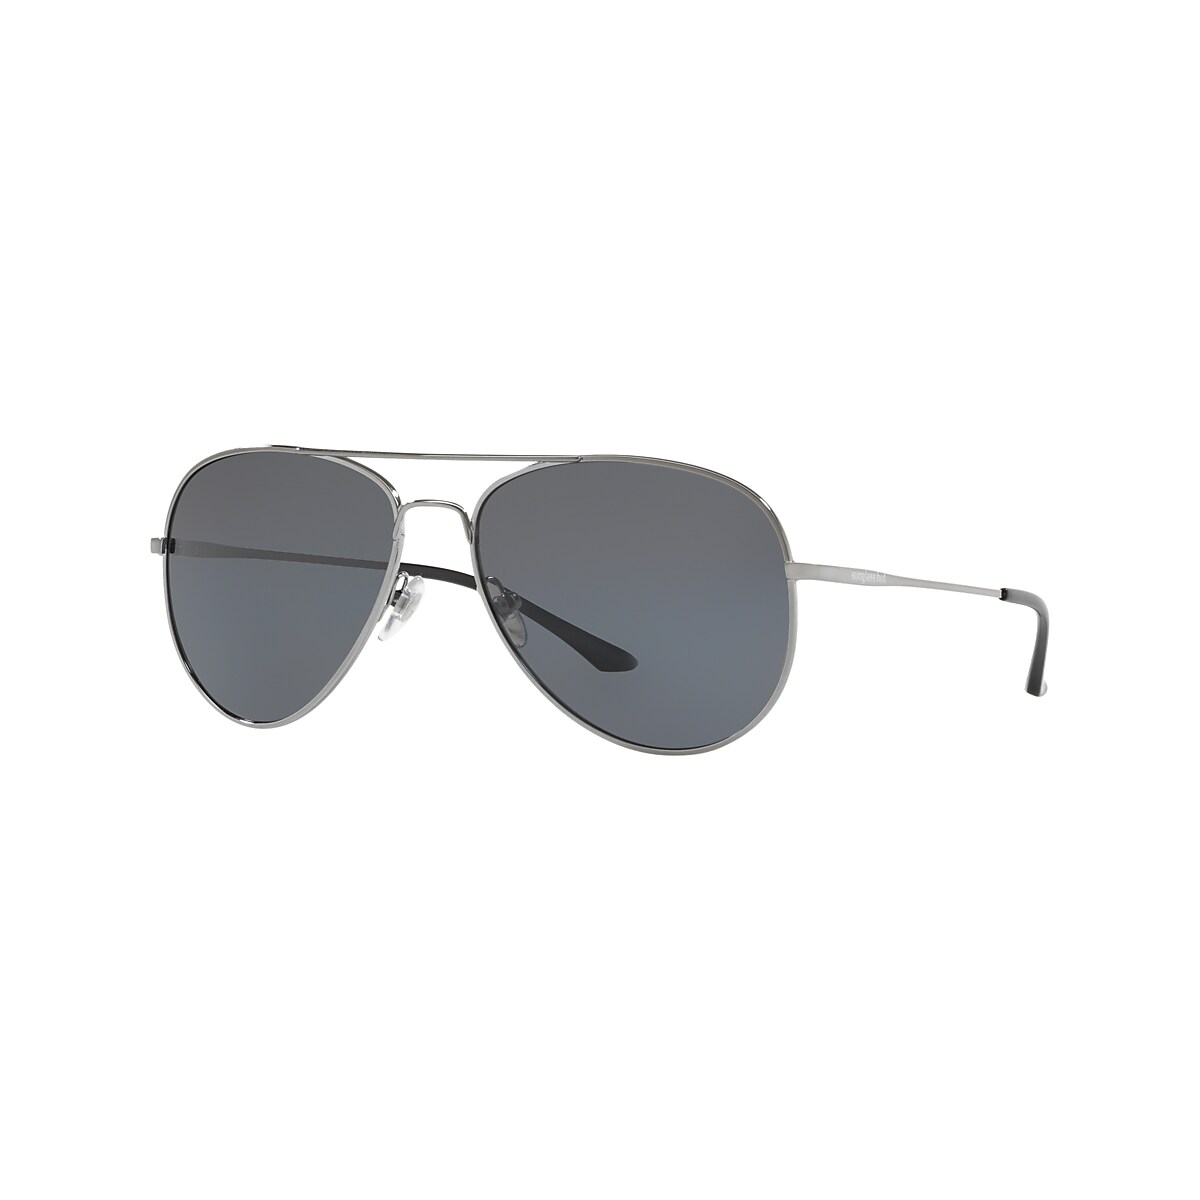 Sunglass Hut Collection HU1001 59 Grey Gradient & Gold Sunglasses